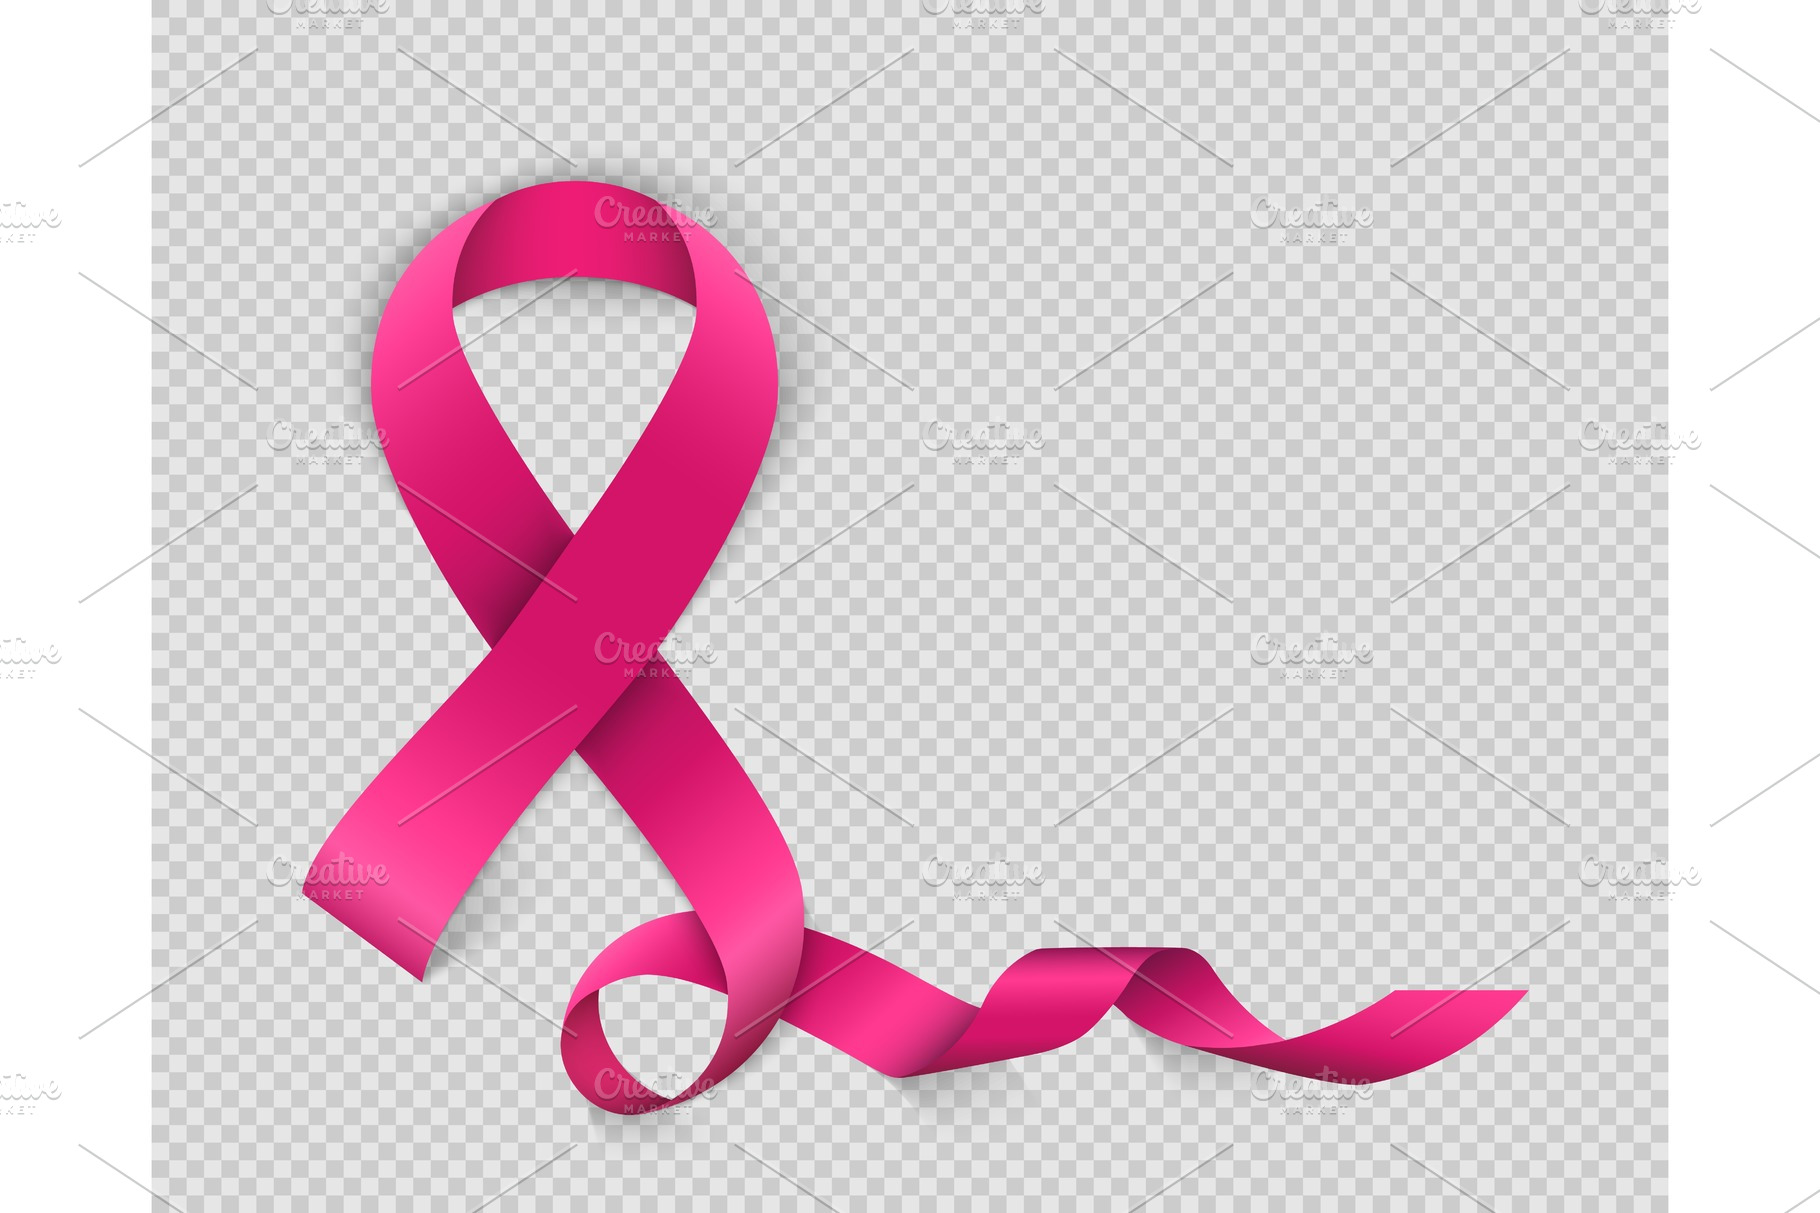 Breast Cancer Awareness Campaign Custom Designed Illustrations